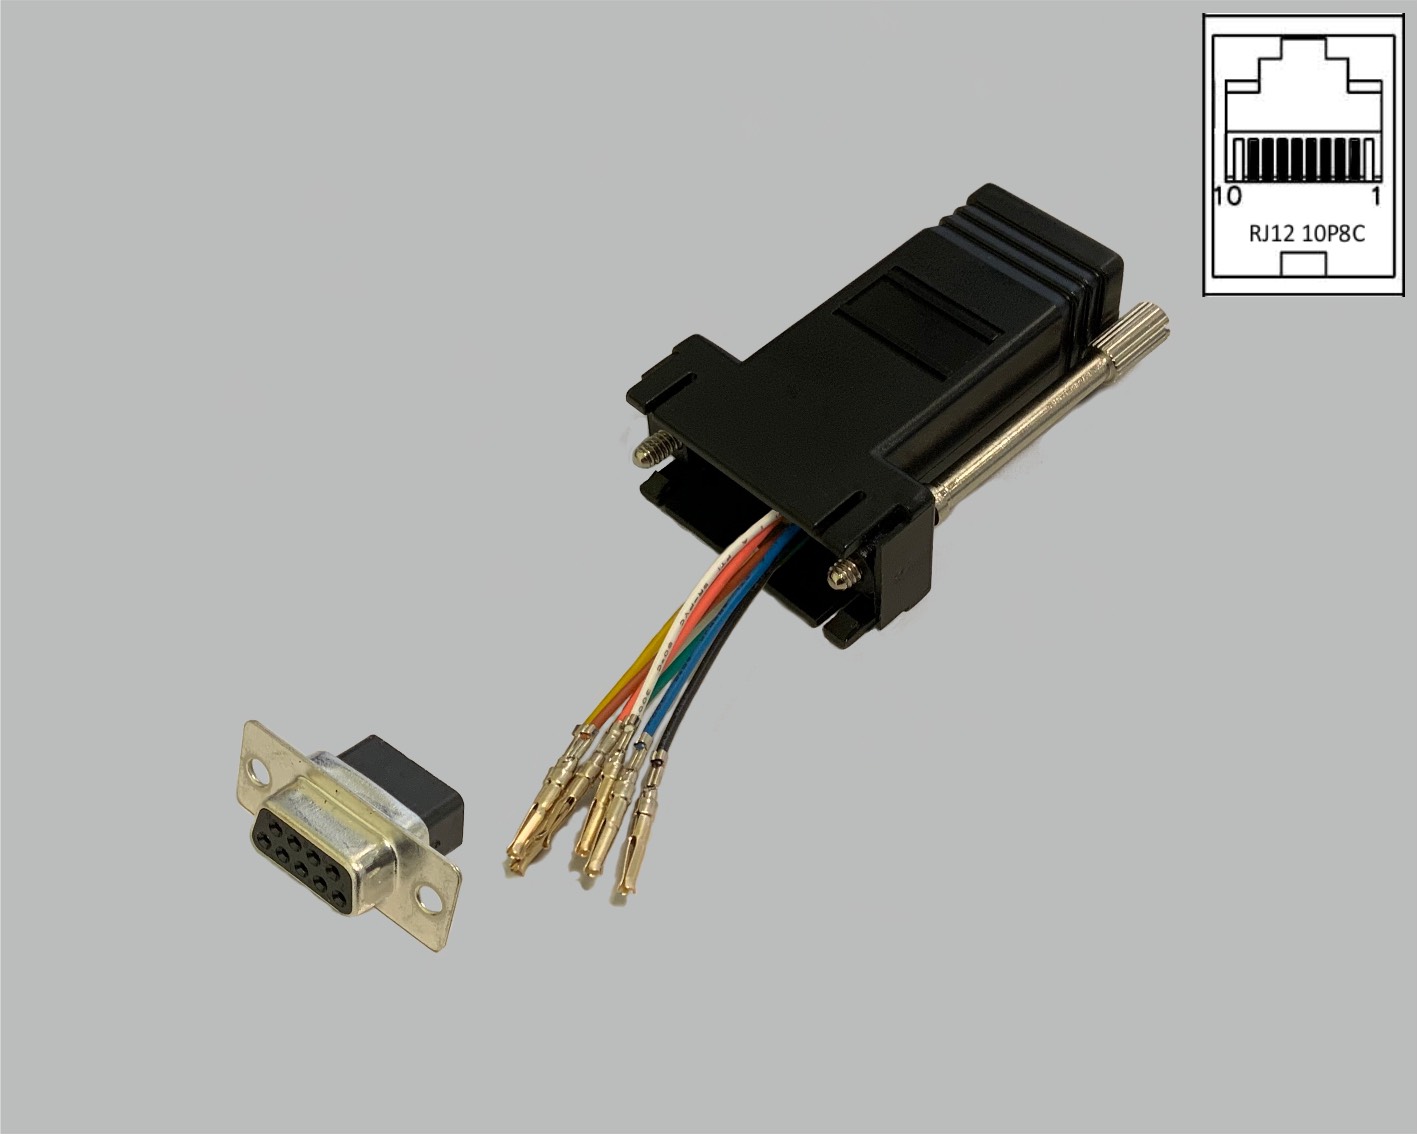 D-Sub/RJ adapter, freely configurable, D-Sub female connector 9-pole to RJ45 (10P8C) female connector, black